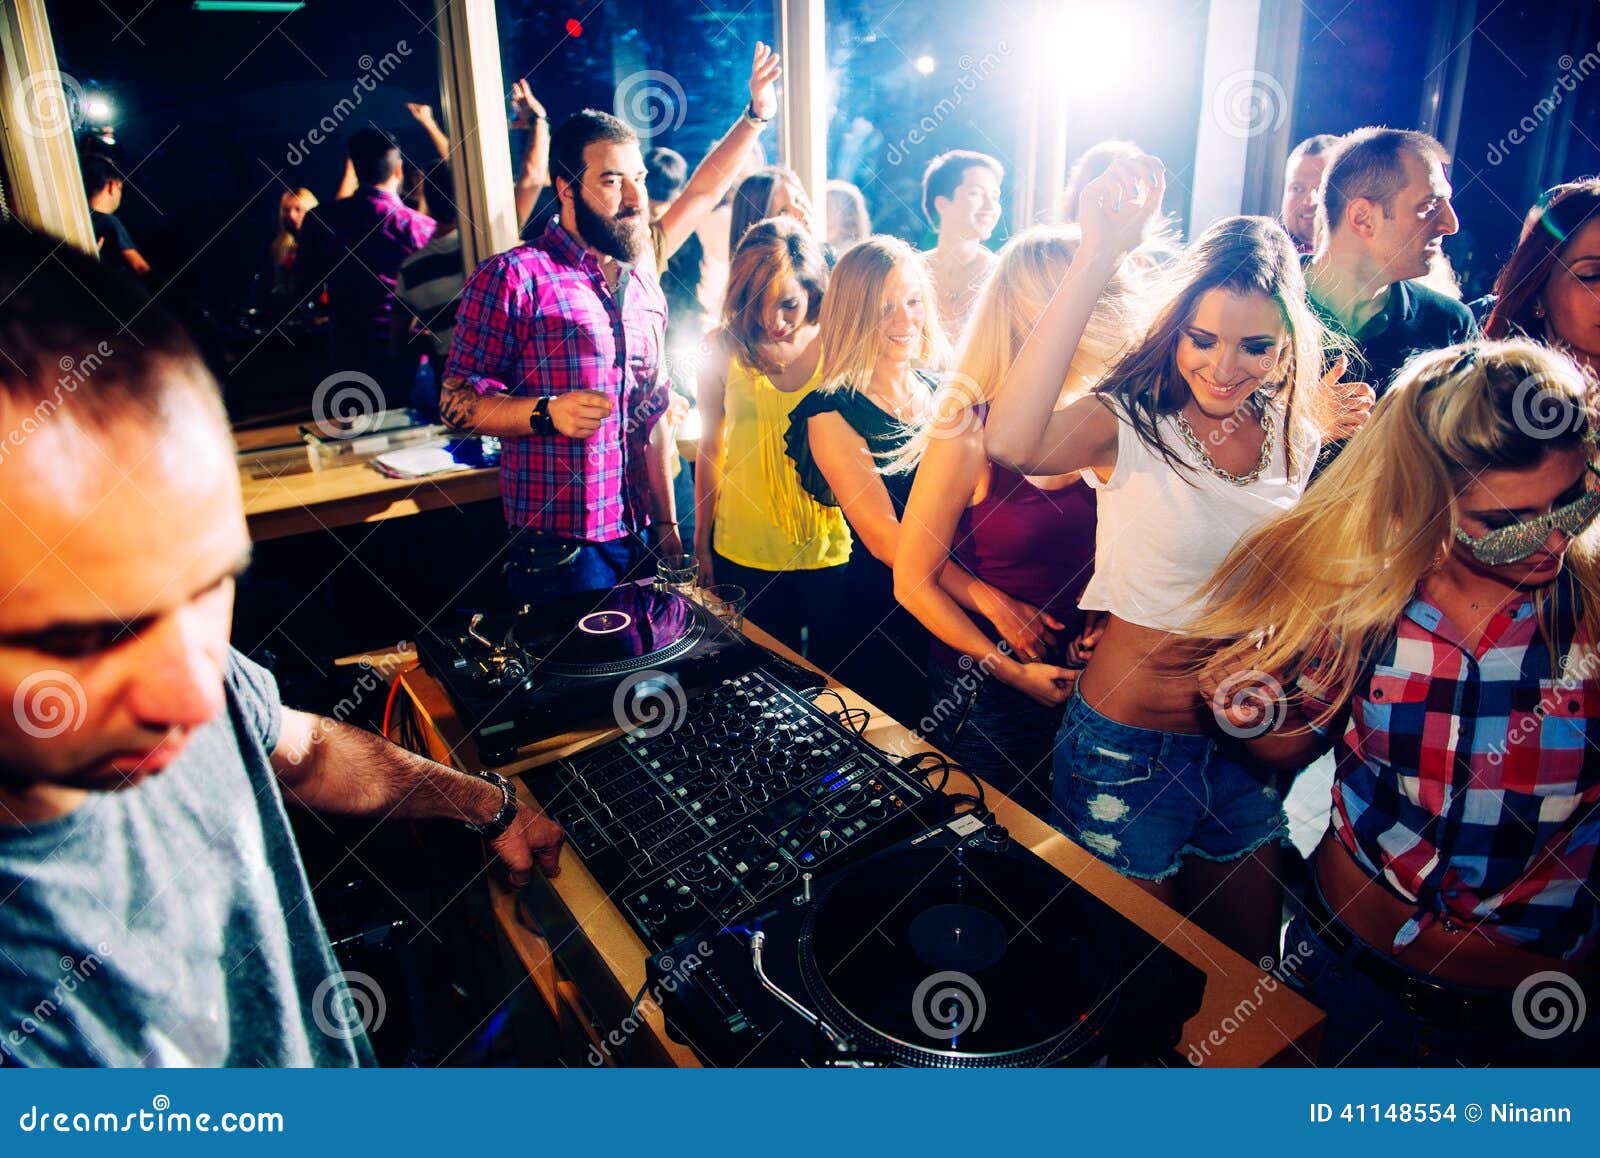 Party people stock photo. Image of nightclub, beauty - 41148554